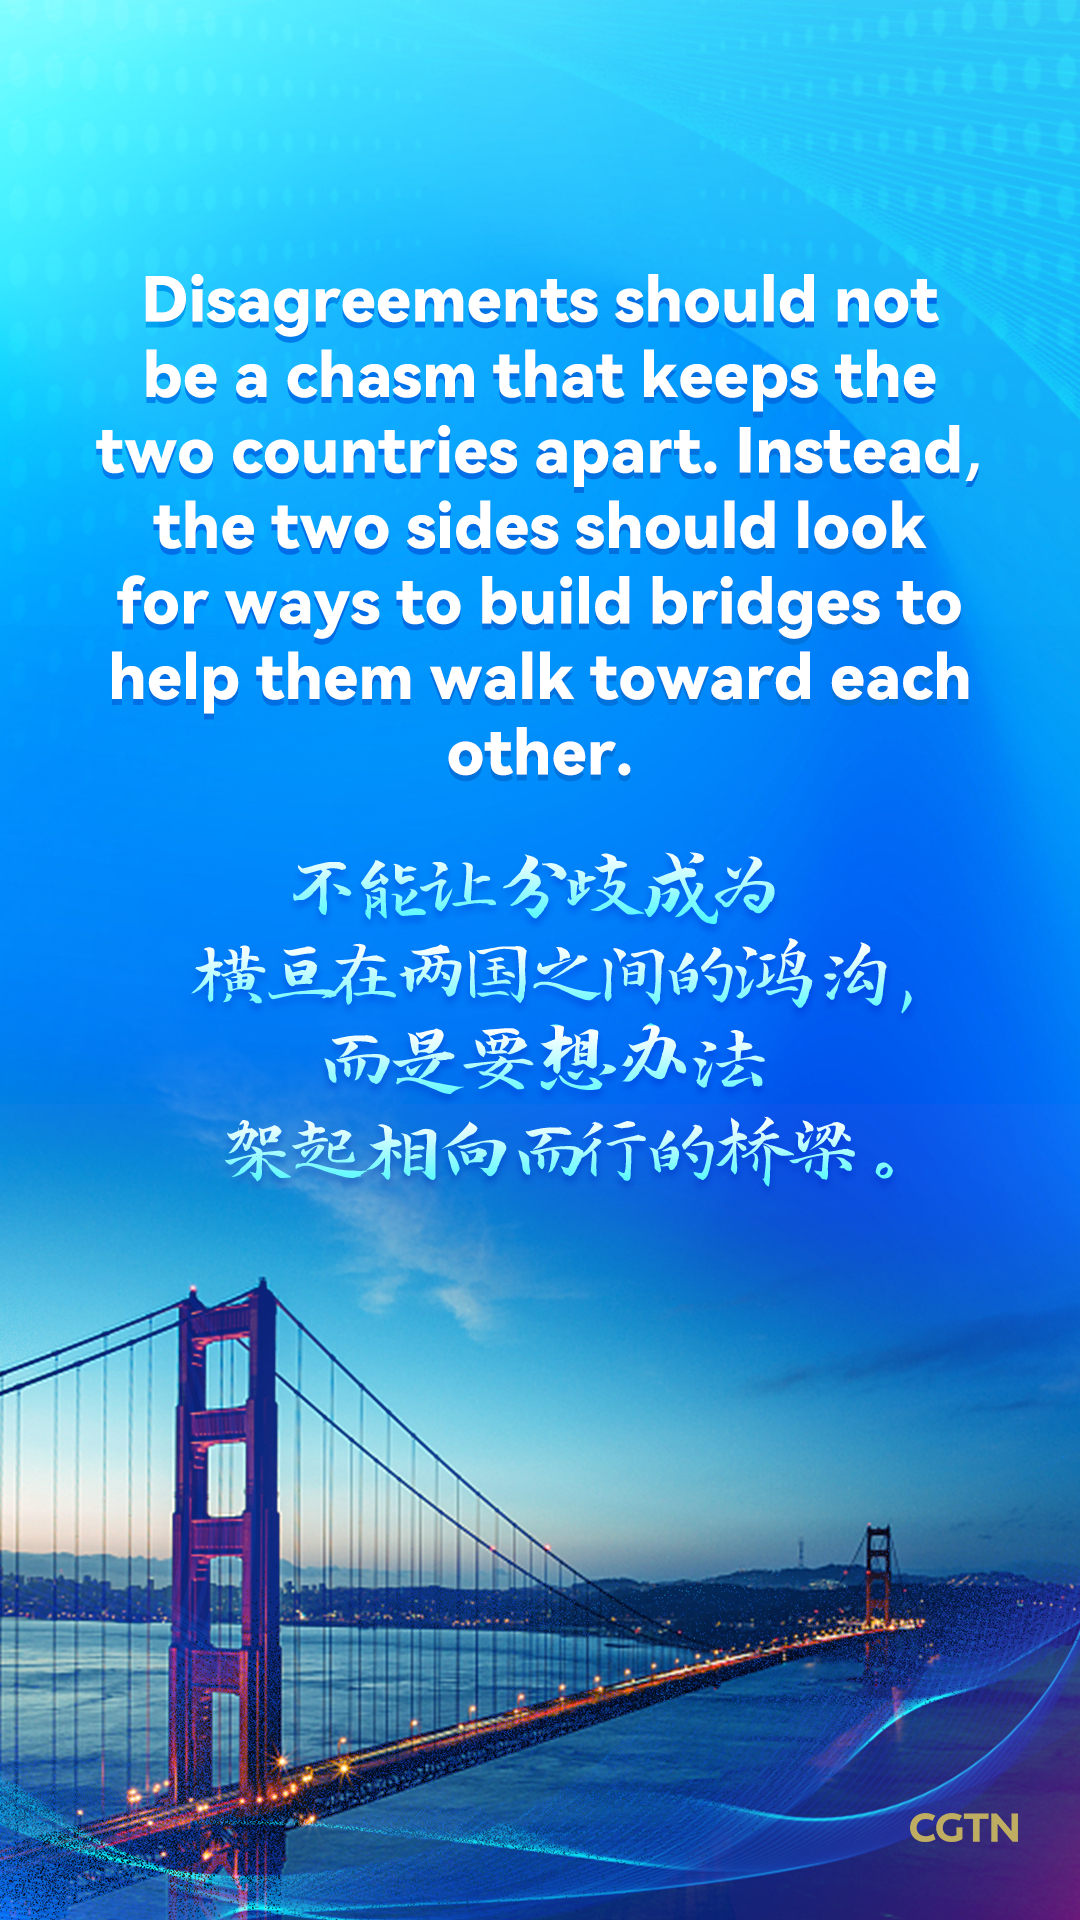 Xi Jinping's key quotes from meeting with Joe Biden